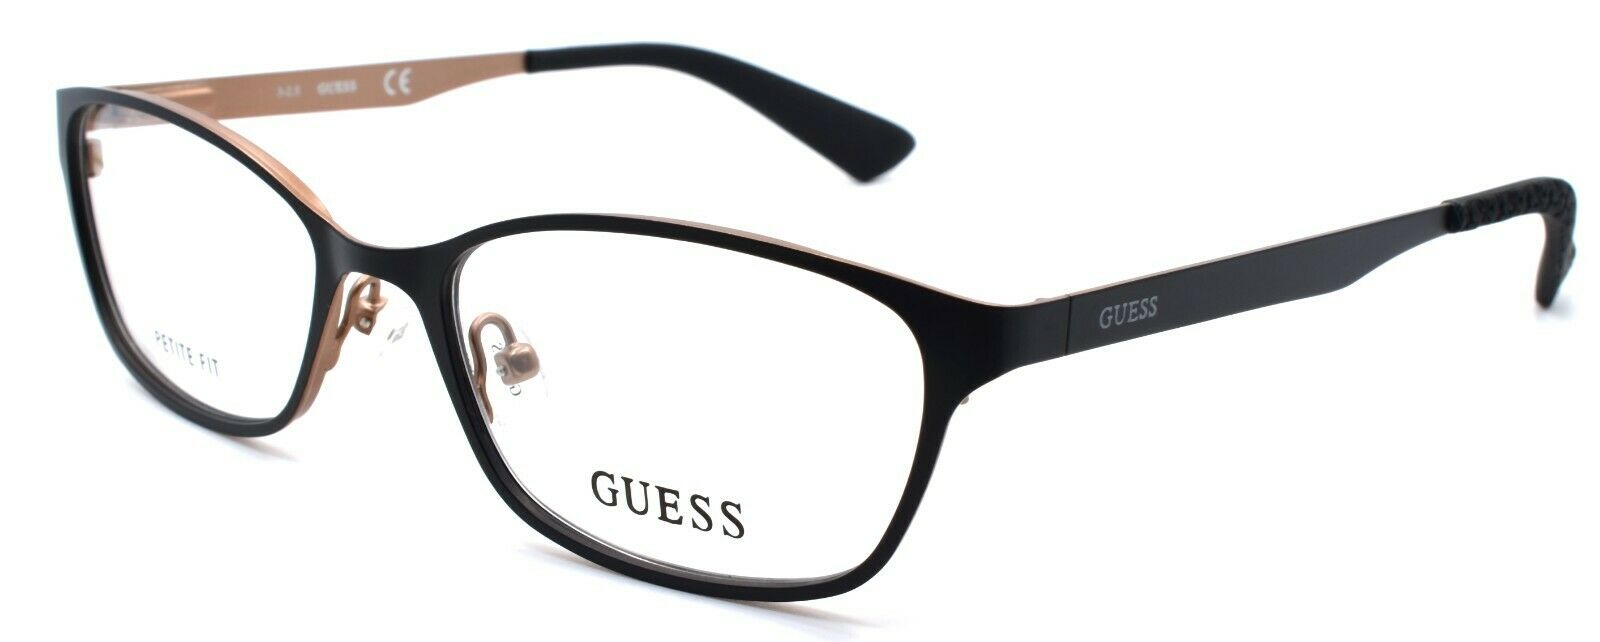 1-GUESS GU2563 002 Women's Eyeglasses Frames Petite 49-16-135 Matte Black-664689787814-IKSpecs